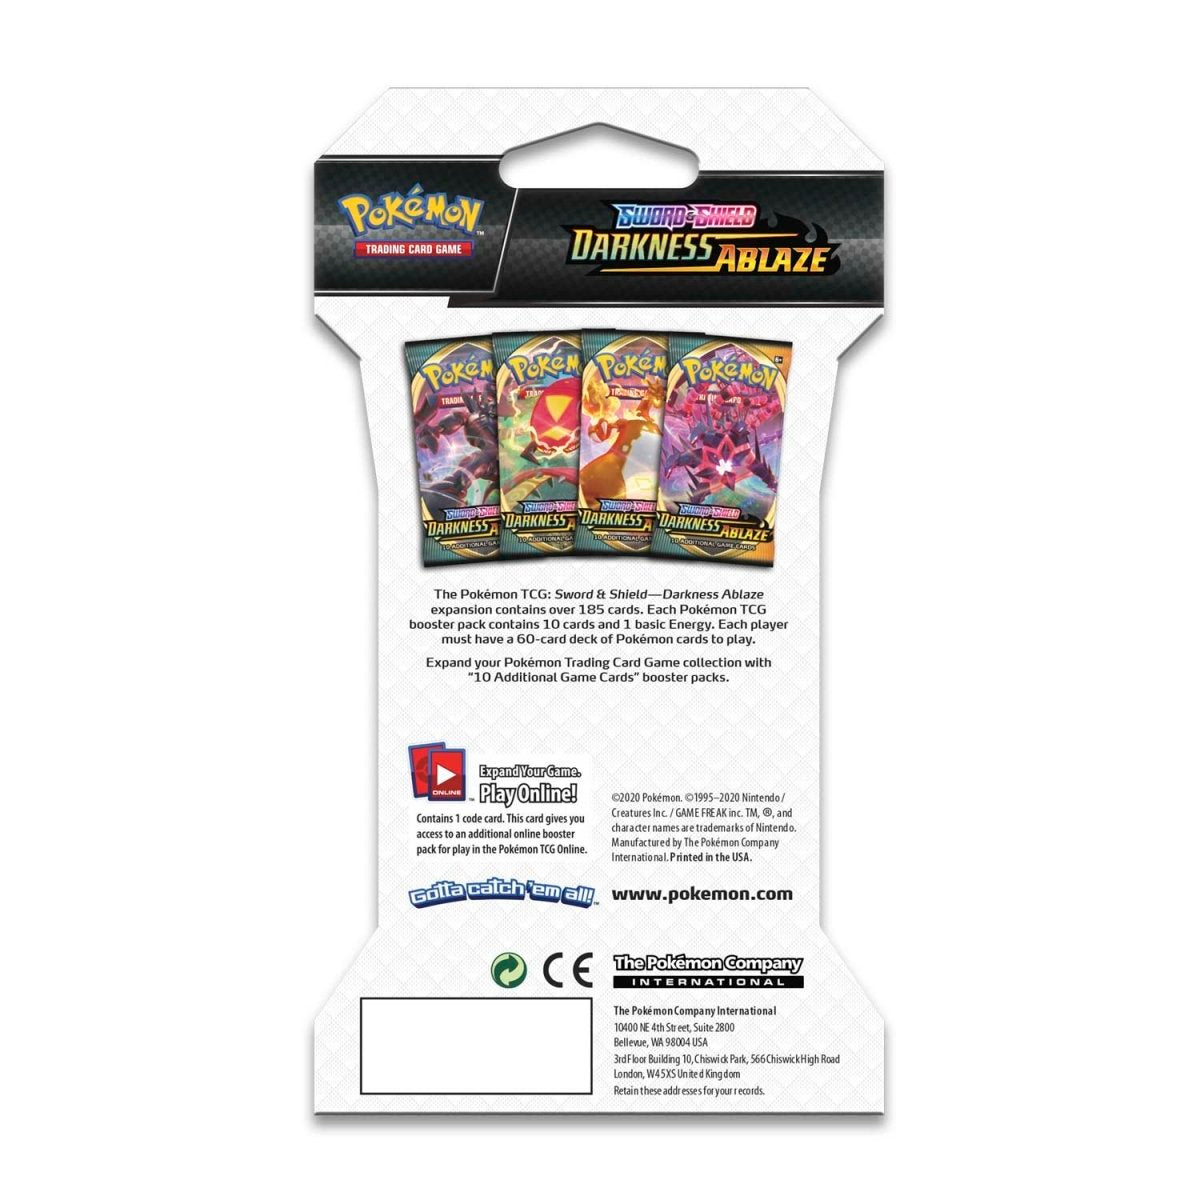 Pokémon TCG: Sword & Shield-Lost Origin Sleeved Booster Pack (10 Cards)